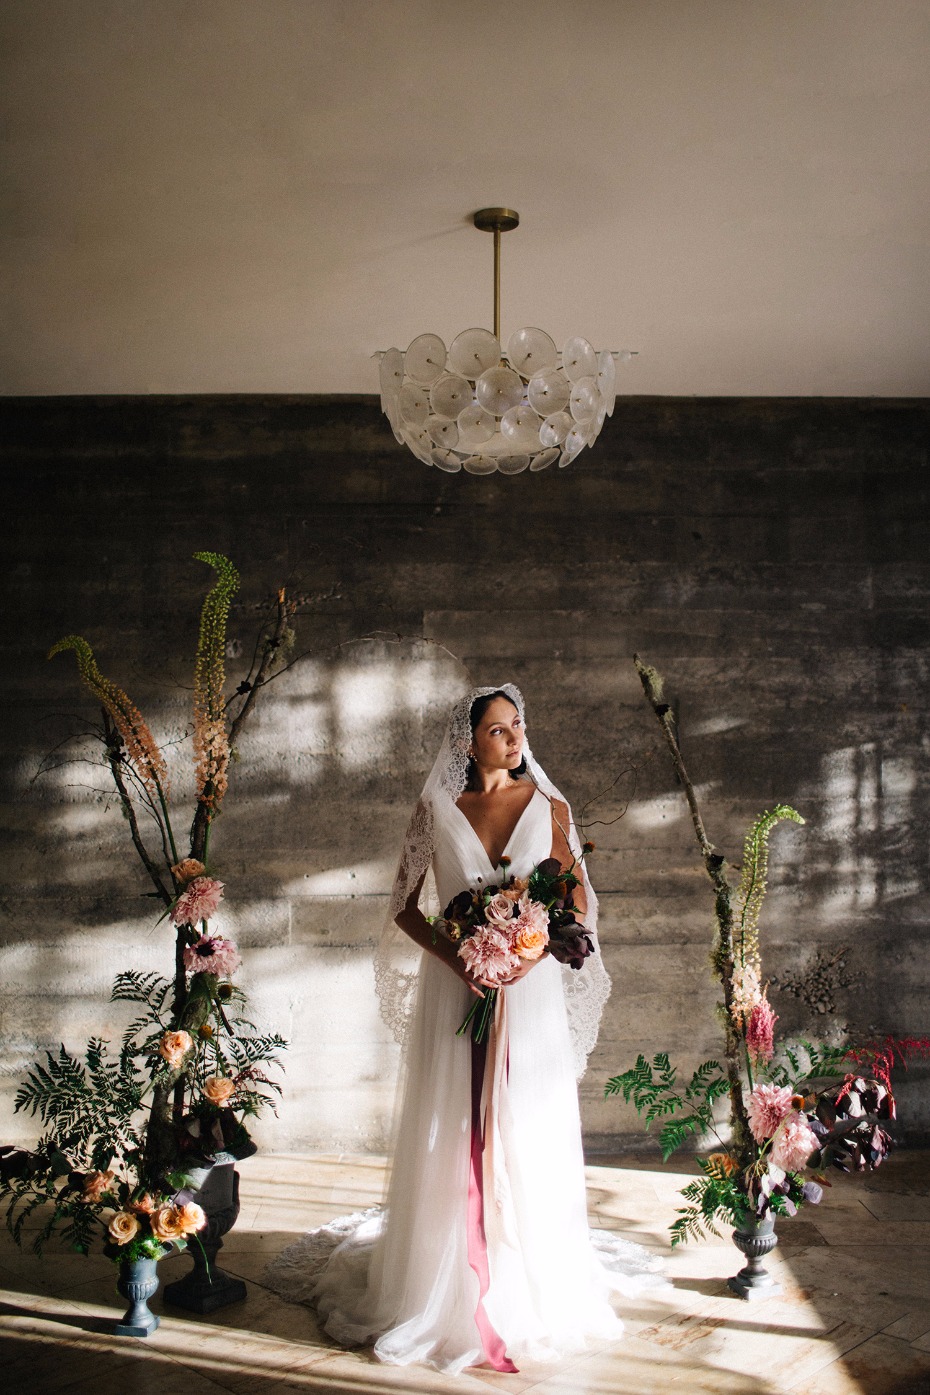 Beautiful bride and ceremony decor